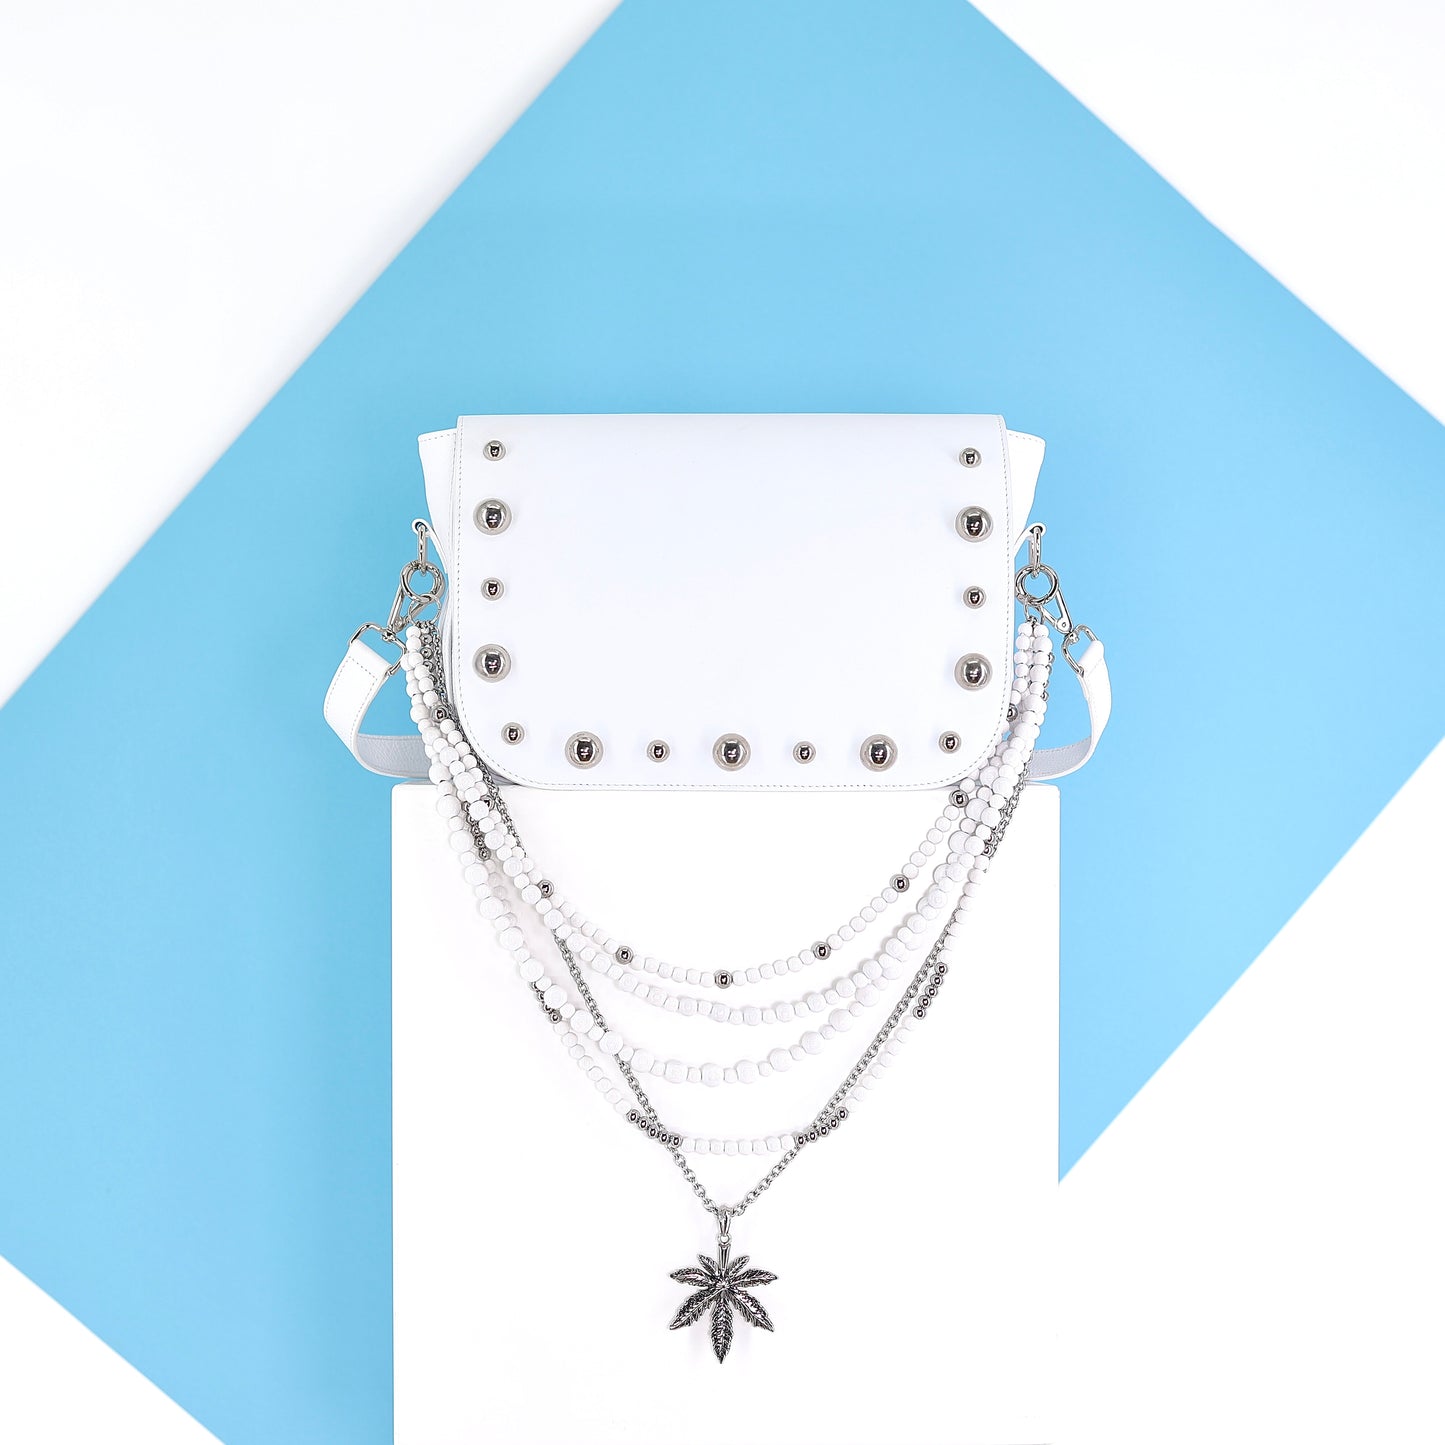 COOL REVOLUZZA 5 jewlery chain in white with marijuana  pendant - CUSTOM MADE